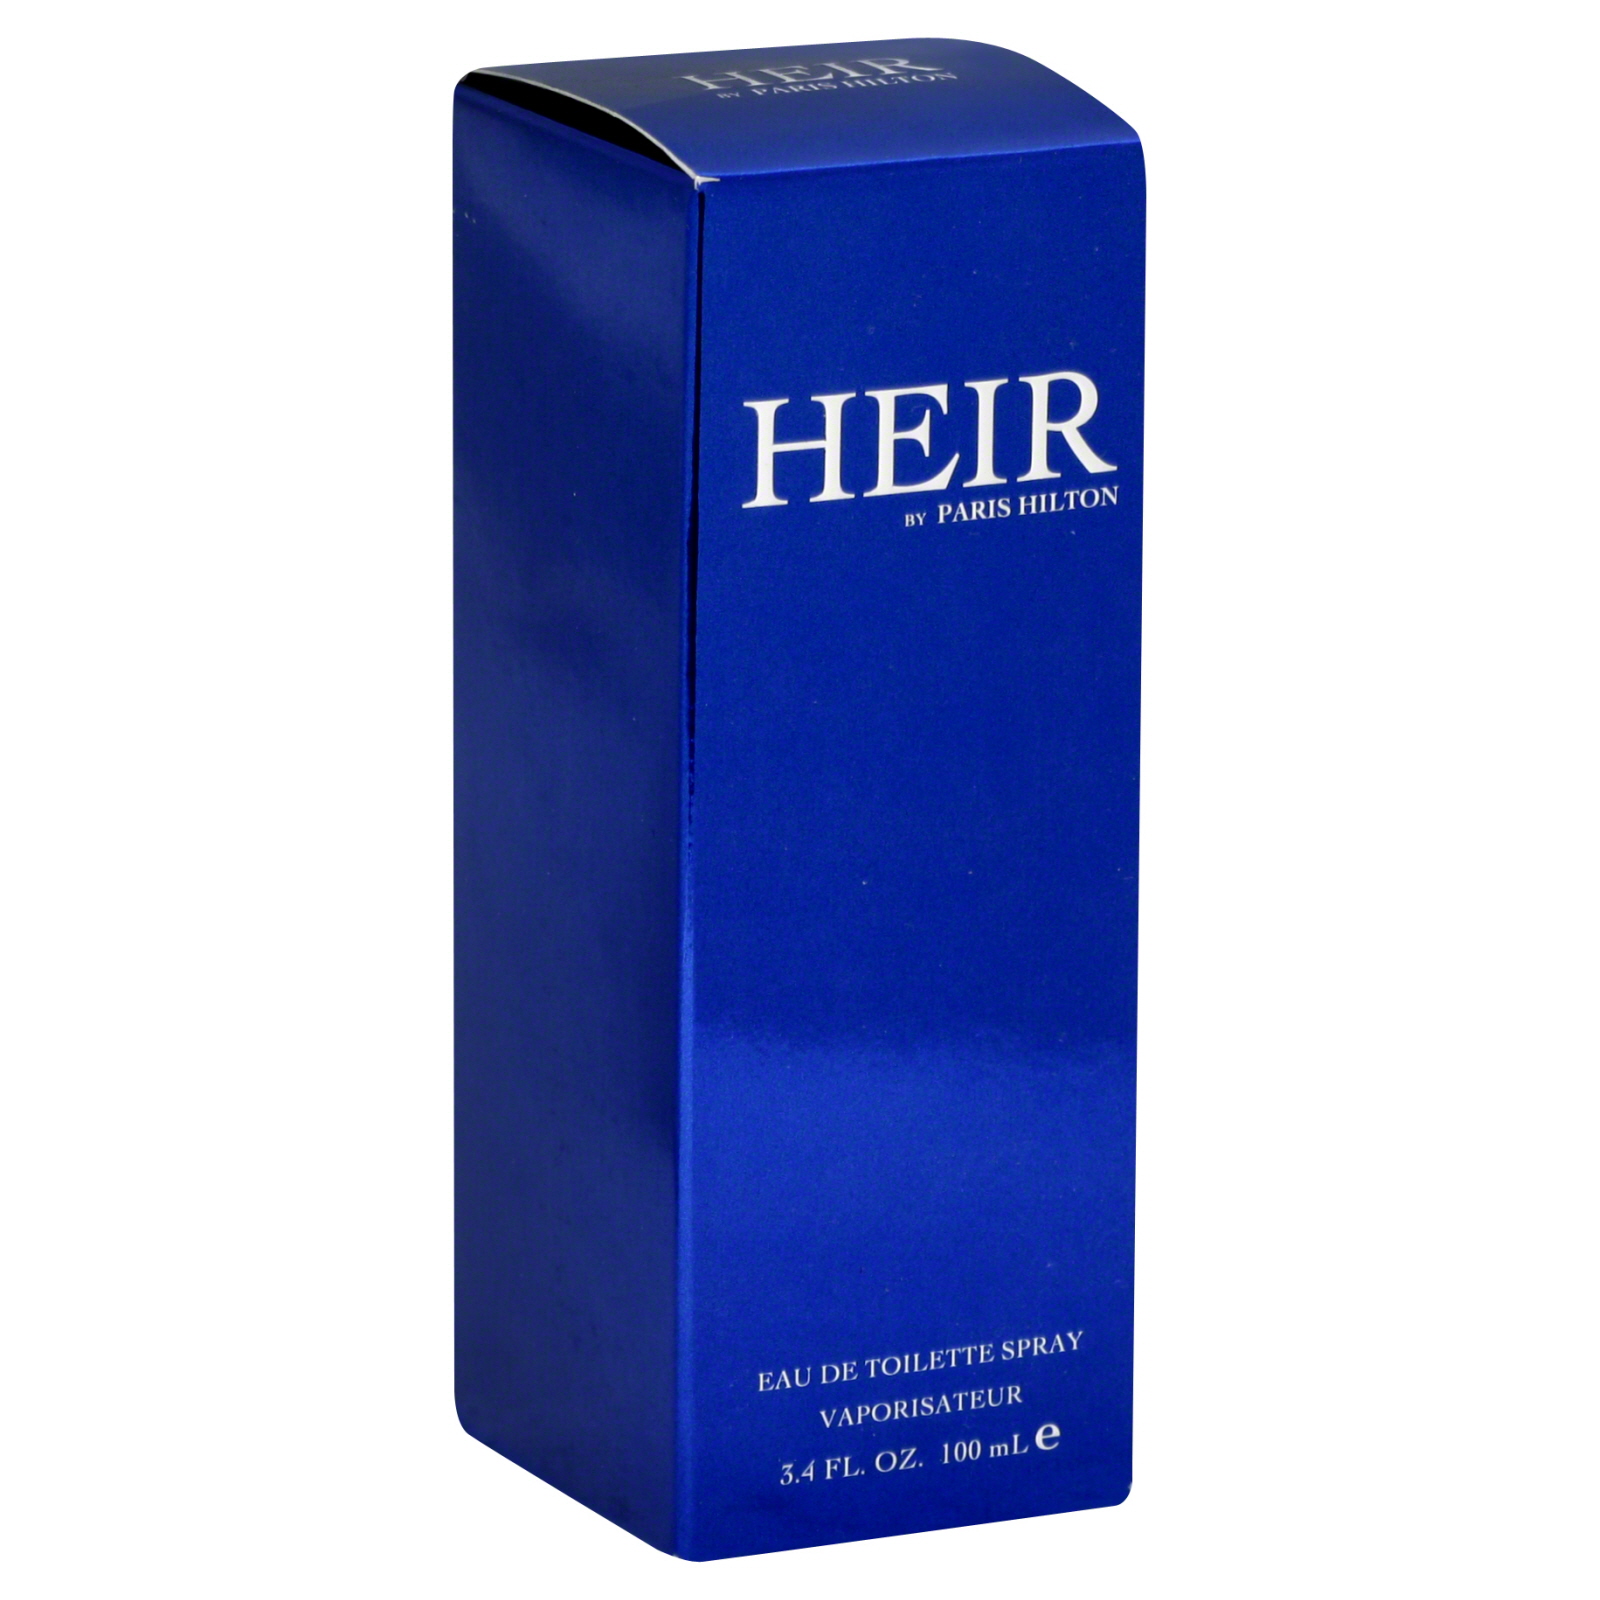 Heir by Paris Hilton for Men - 3.4 oz EDT Spray